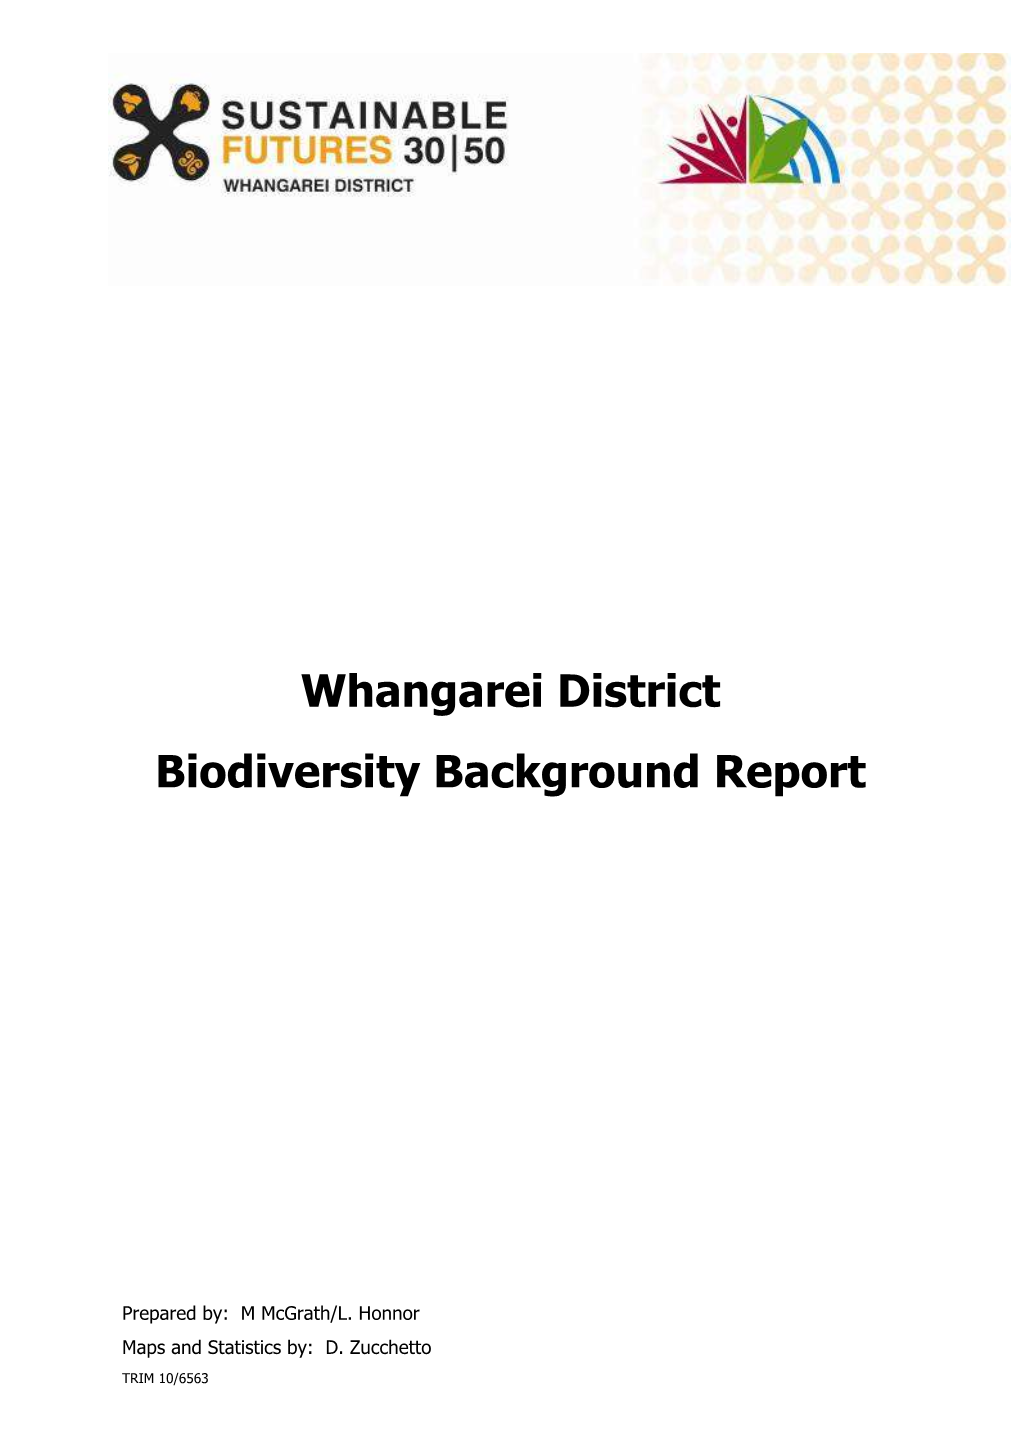 Biodiversity Background Report